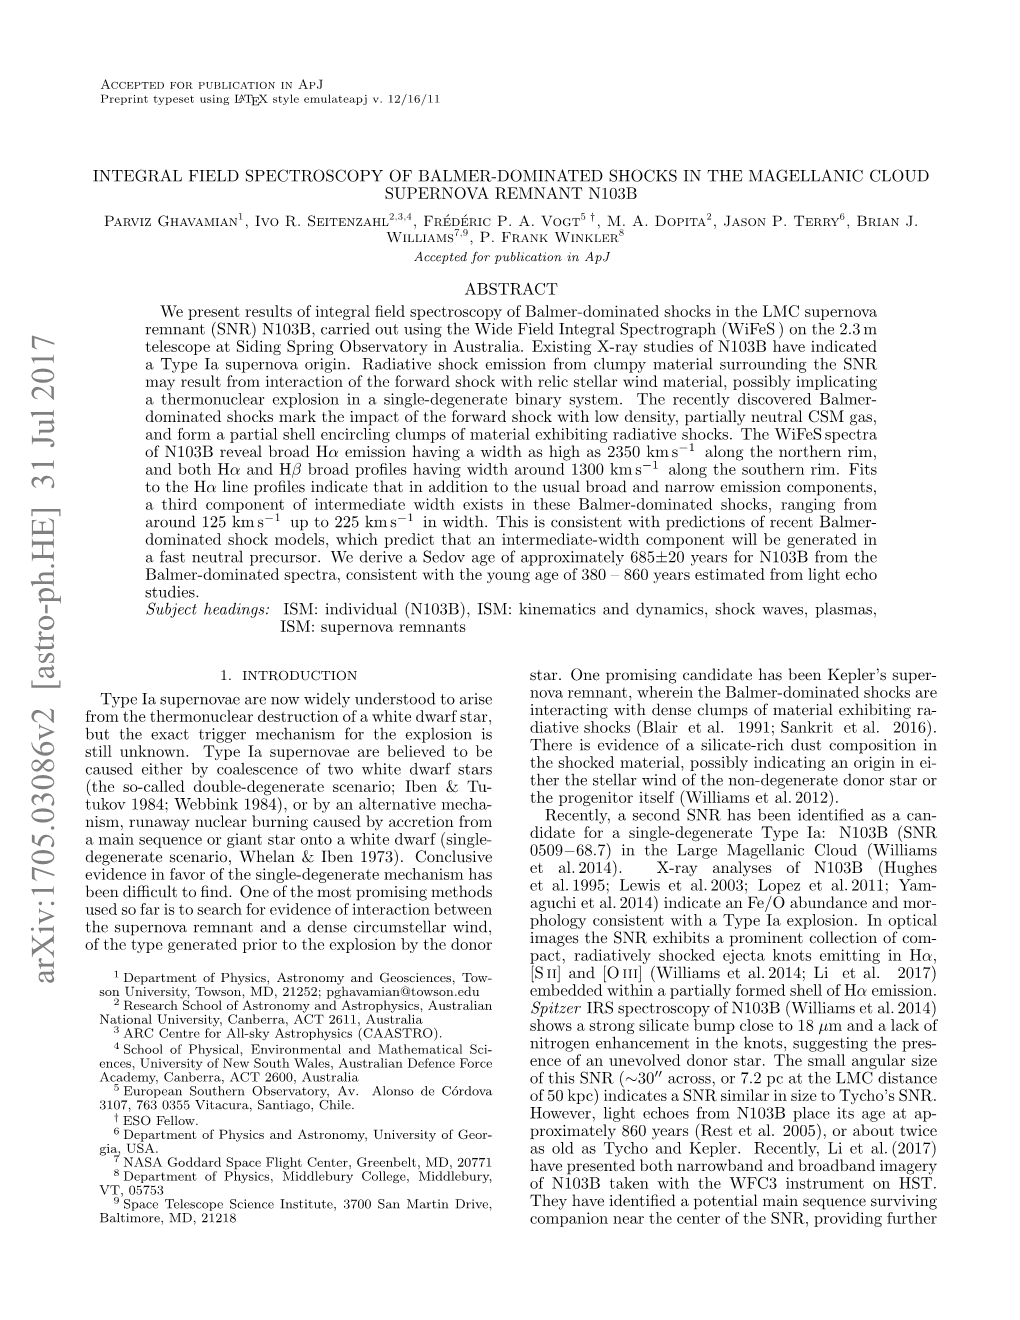 INTEGRAL FIELD SPECTROSCOPY of BALMER-DOMINATED SHOCKS in the MAGELLANIC CLOUD SUPERNOVA REMNANT N103B Parviz Ghavamian1, Ivo R